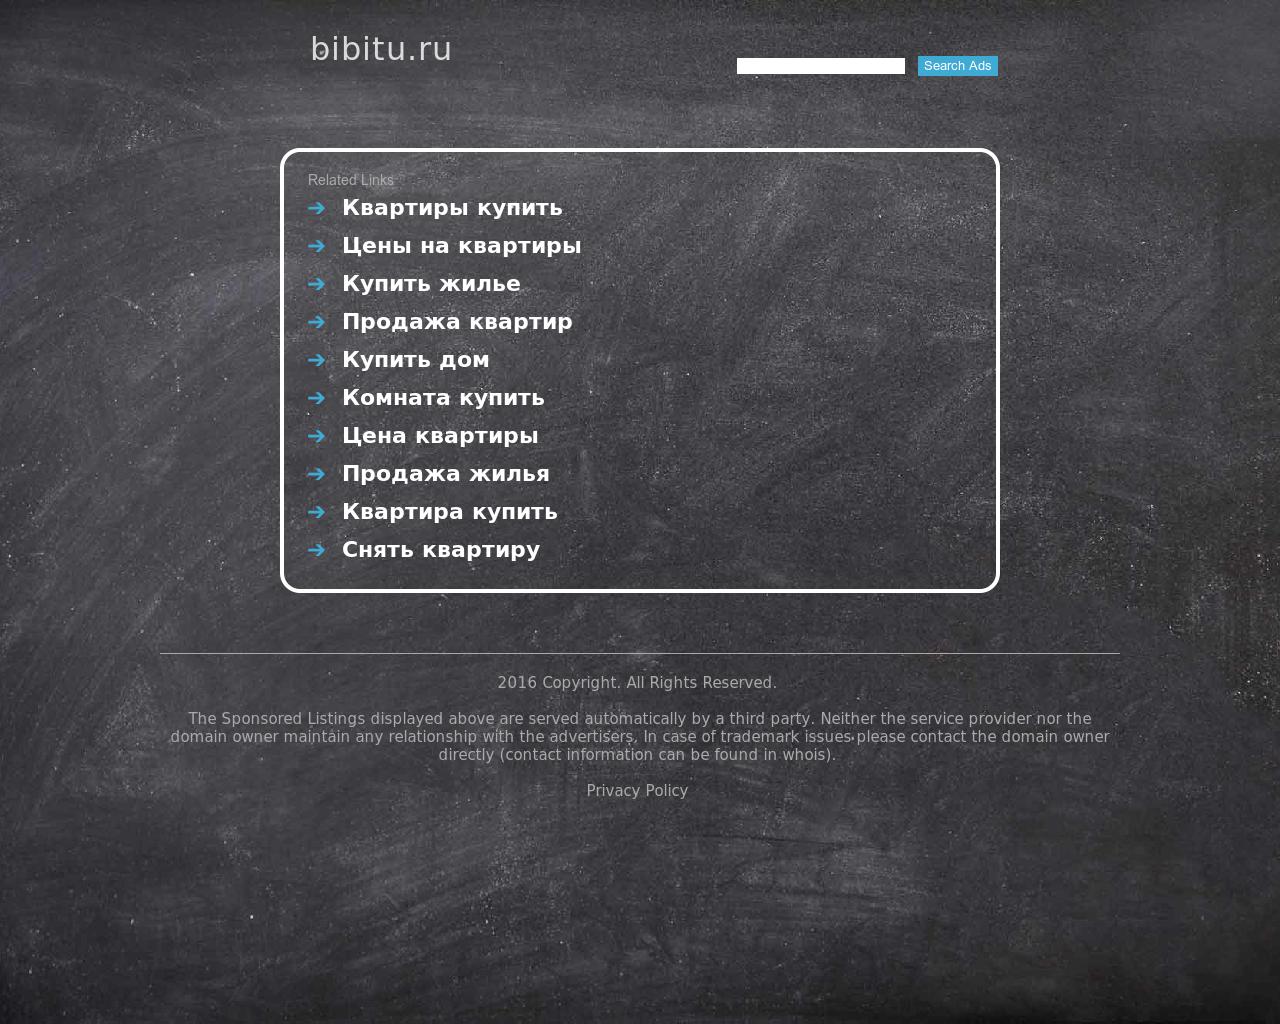 Изображение сайта bibitu.ru в разрешении 1280x1024